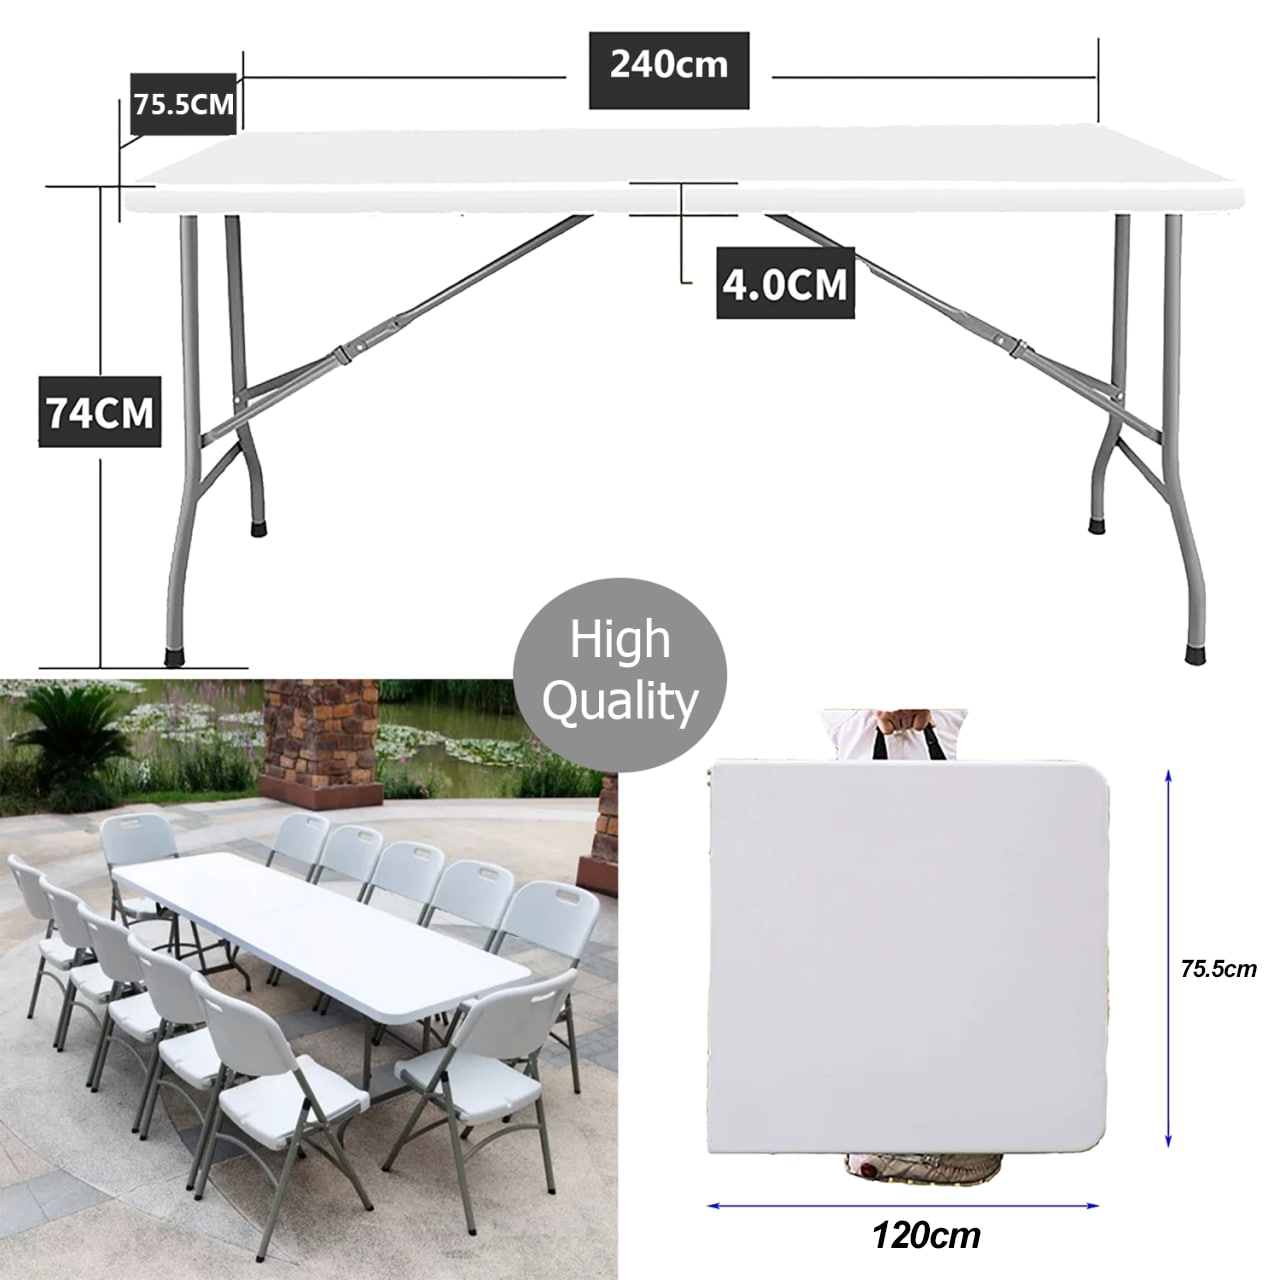 240cm Portable Folding  Table HDPE wicker rattan series